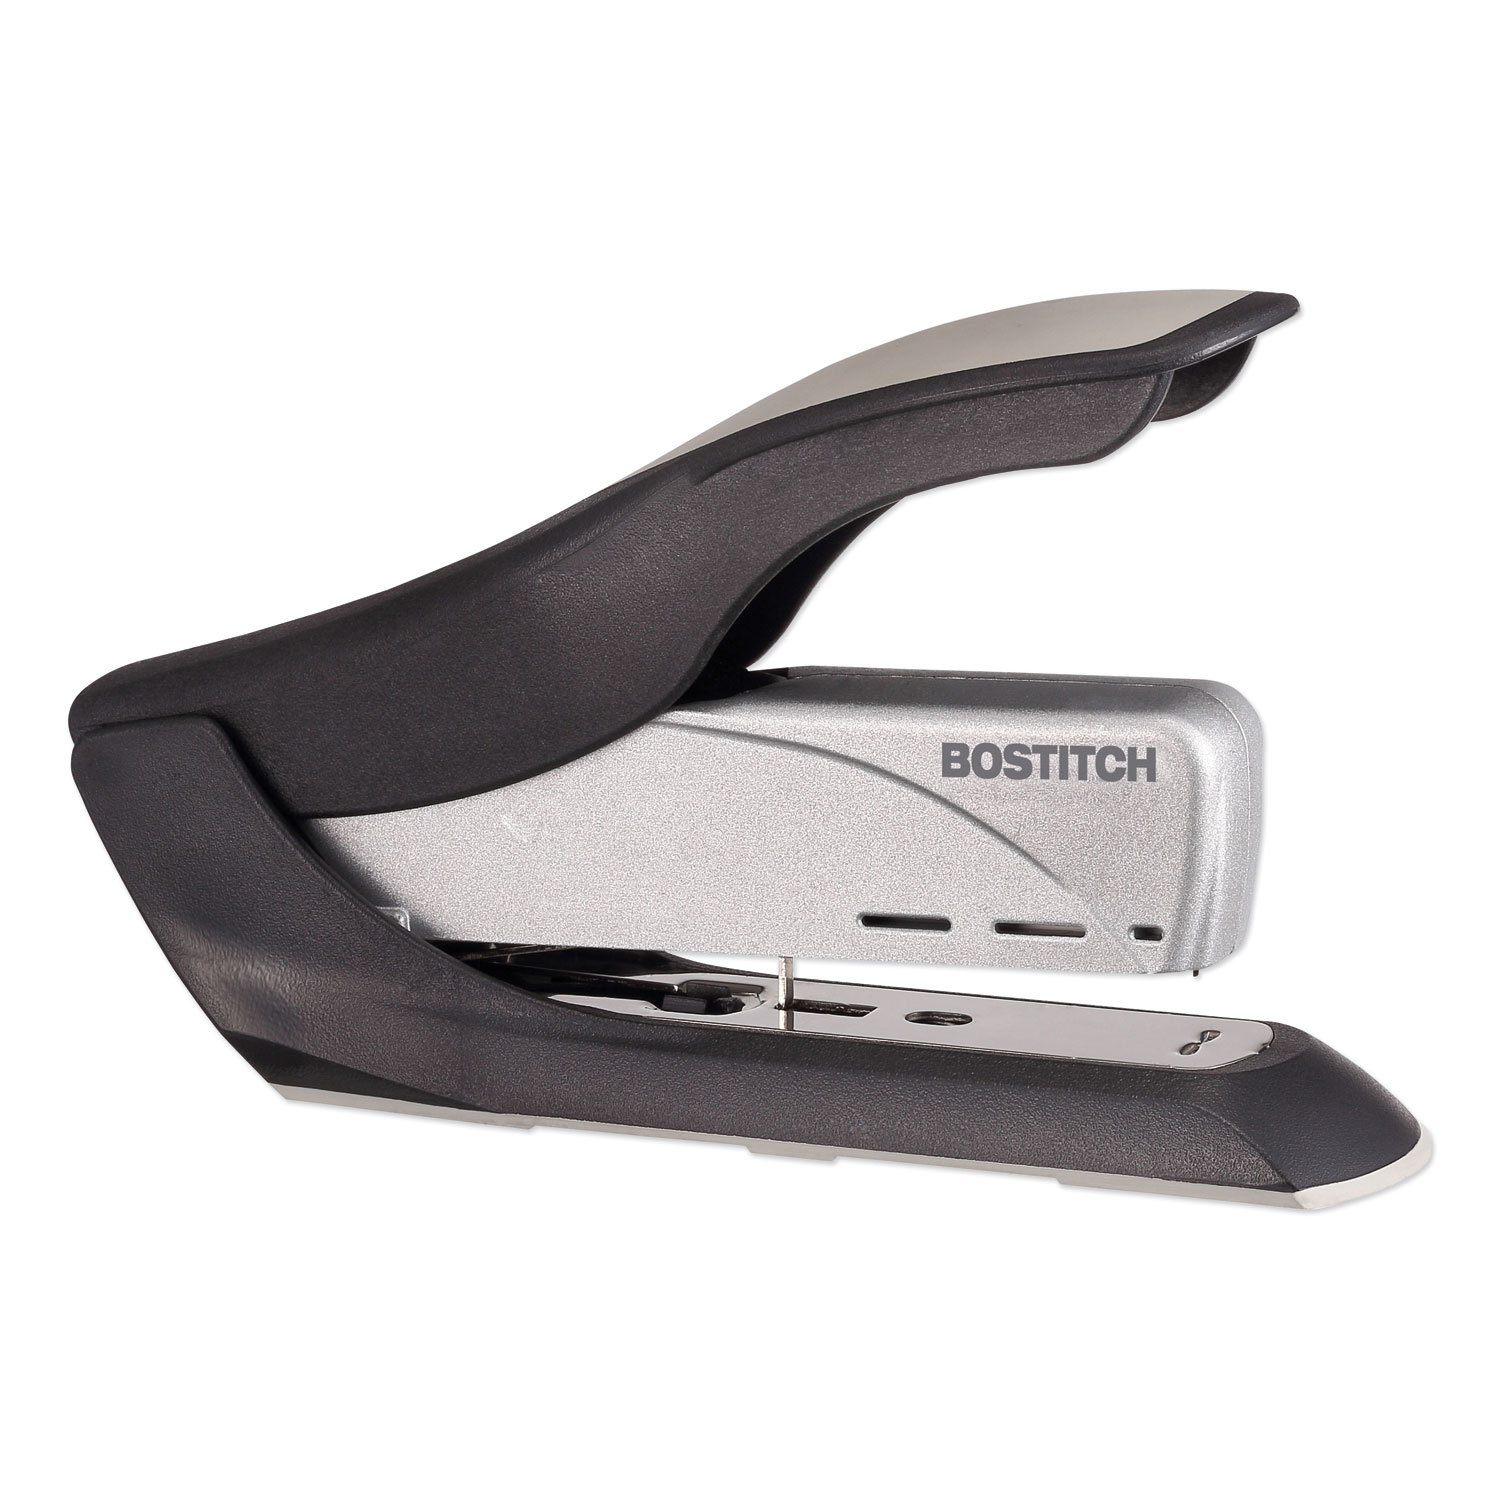  Bostitch 1210 Spring-Powered Premium Heavy-Duty Stapler, 65-Sheet Capacity, Black/Silver (ACI1210) 